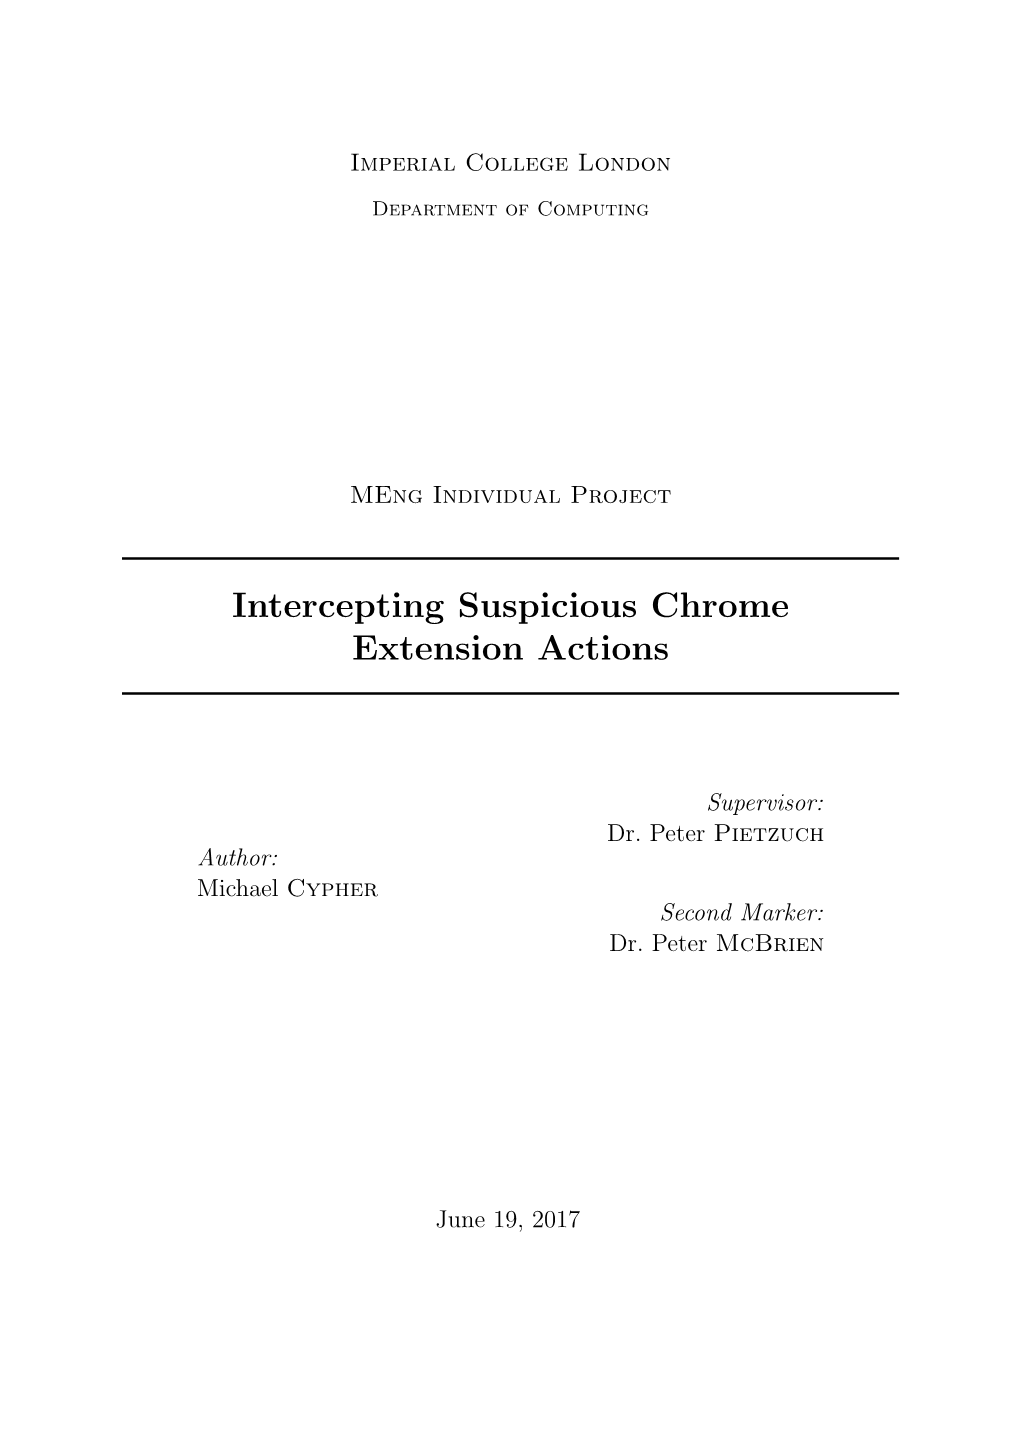 Intercepting Suspicious Chrome Extension Actions